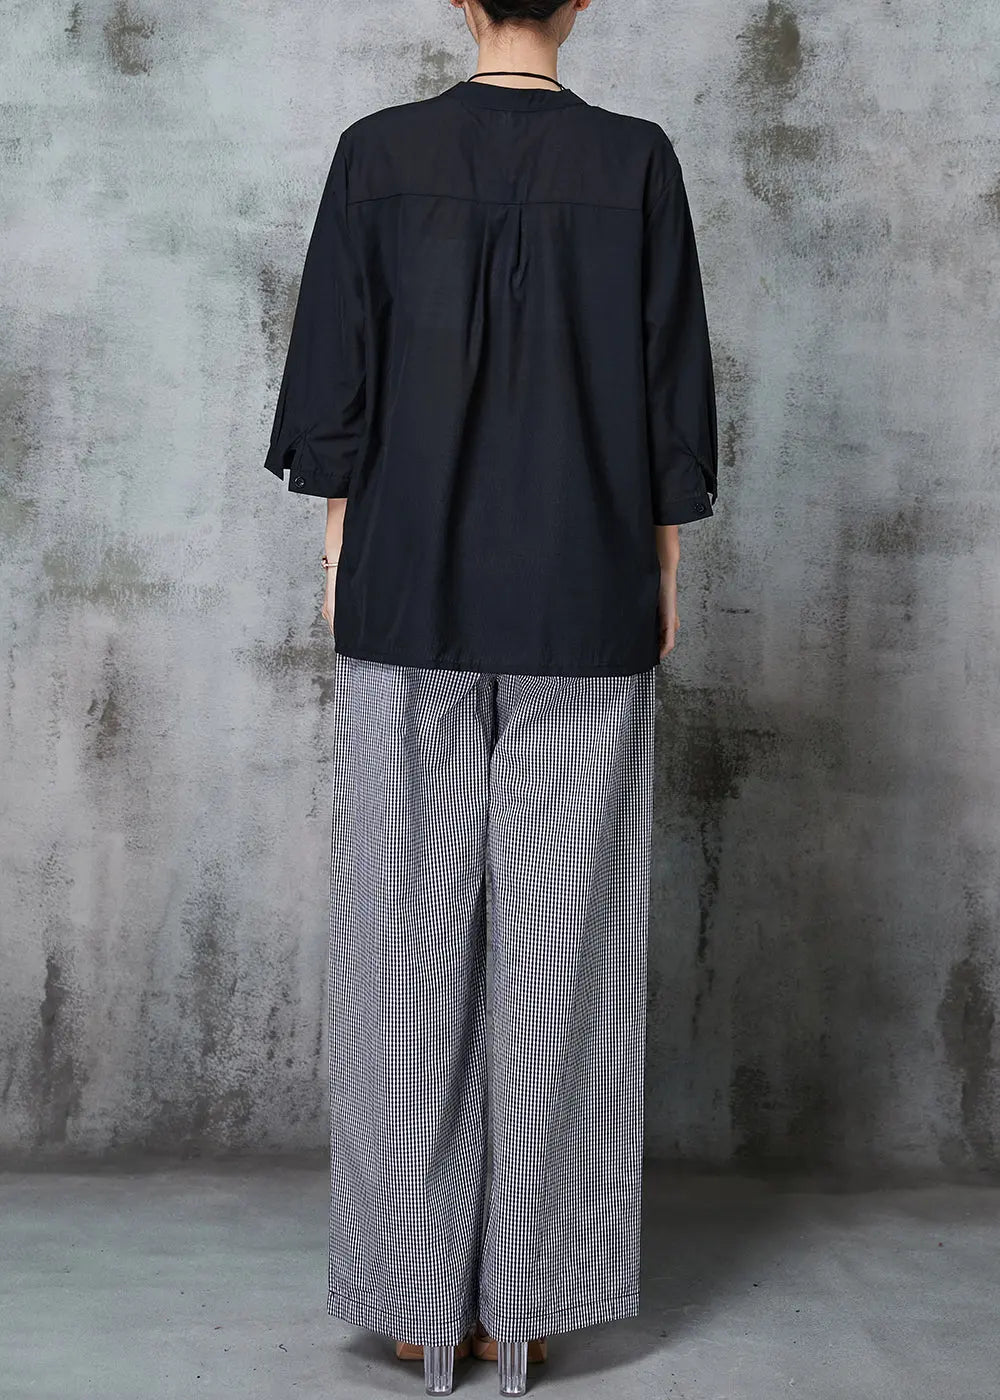 Plus Size Black Oversized Plaid Linen 2 Piece Outfit Spring Ada Fashion